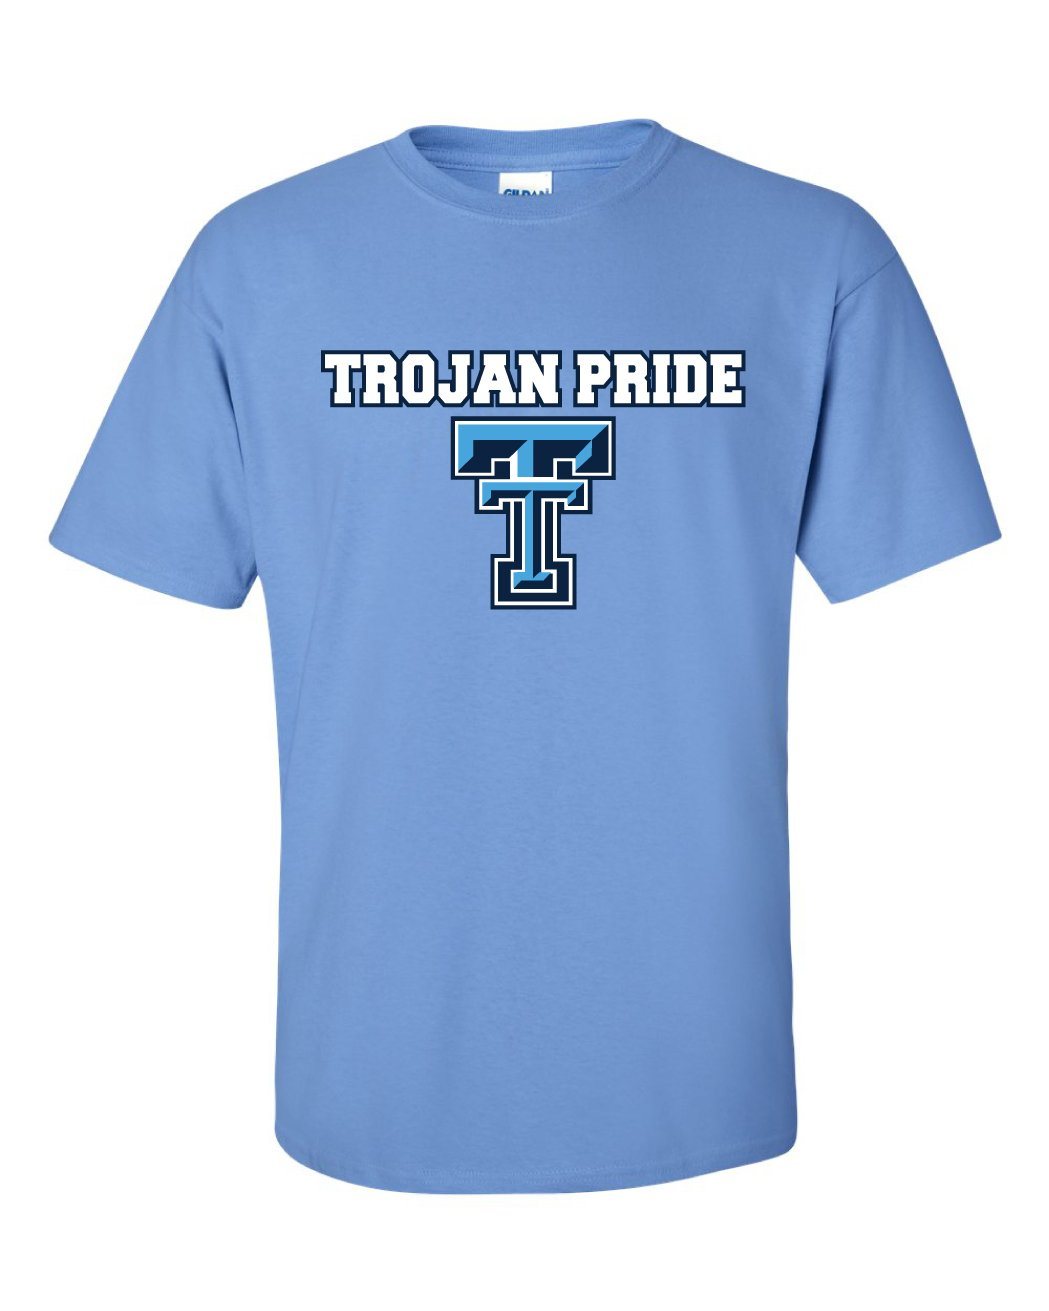 Triopia Trojans - Trojan Pride T-Shirt